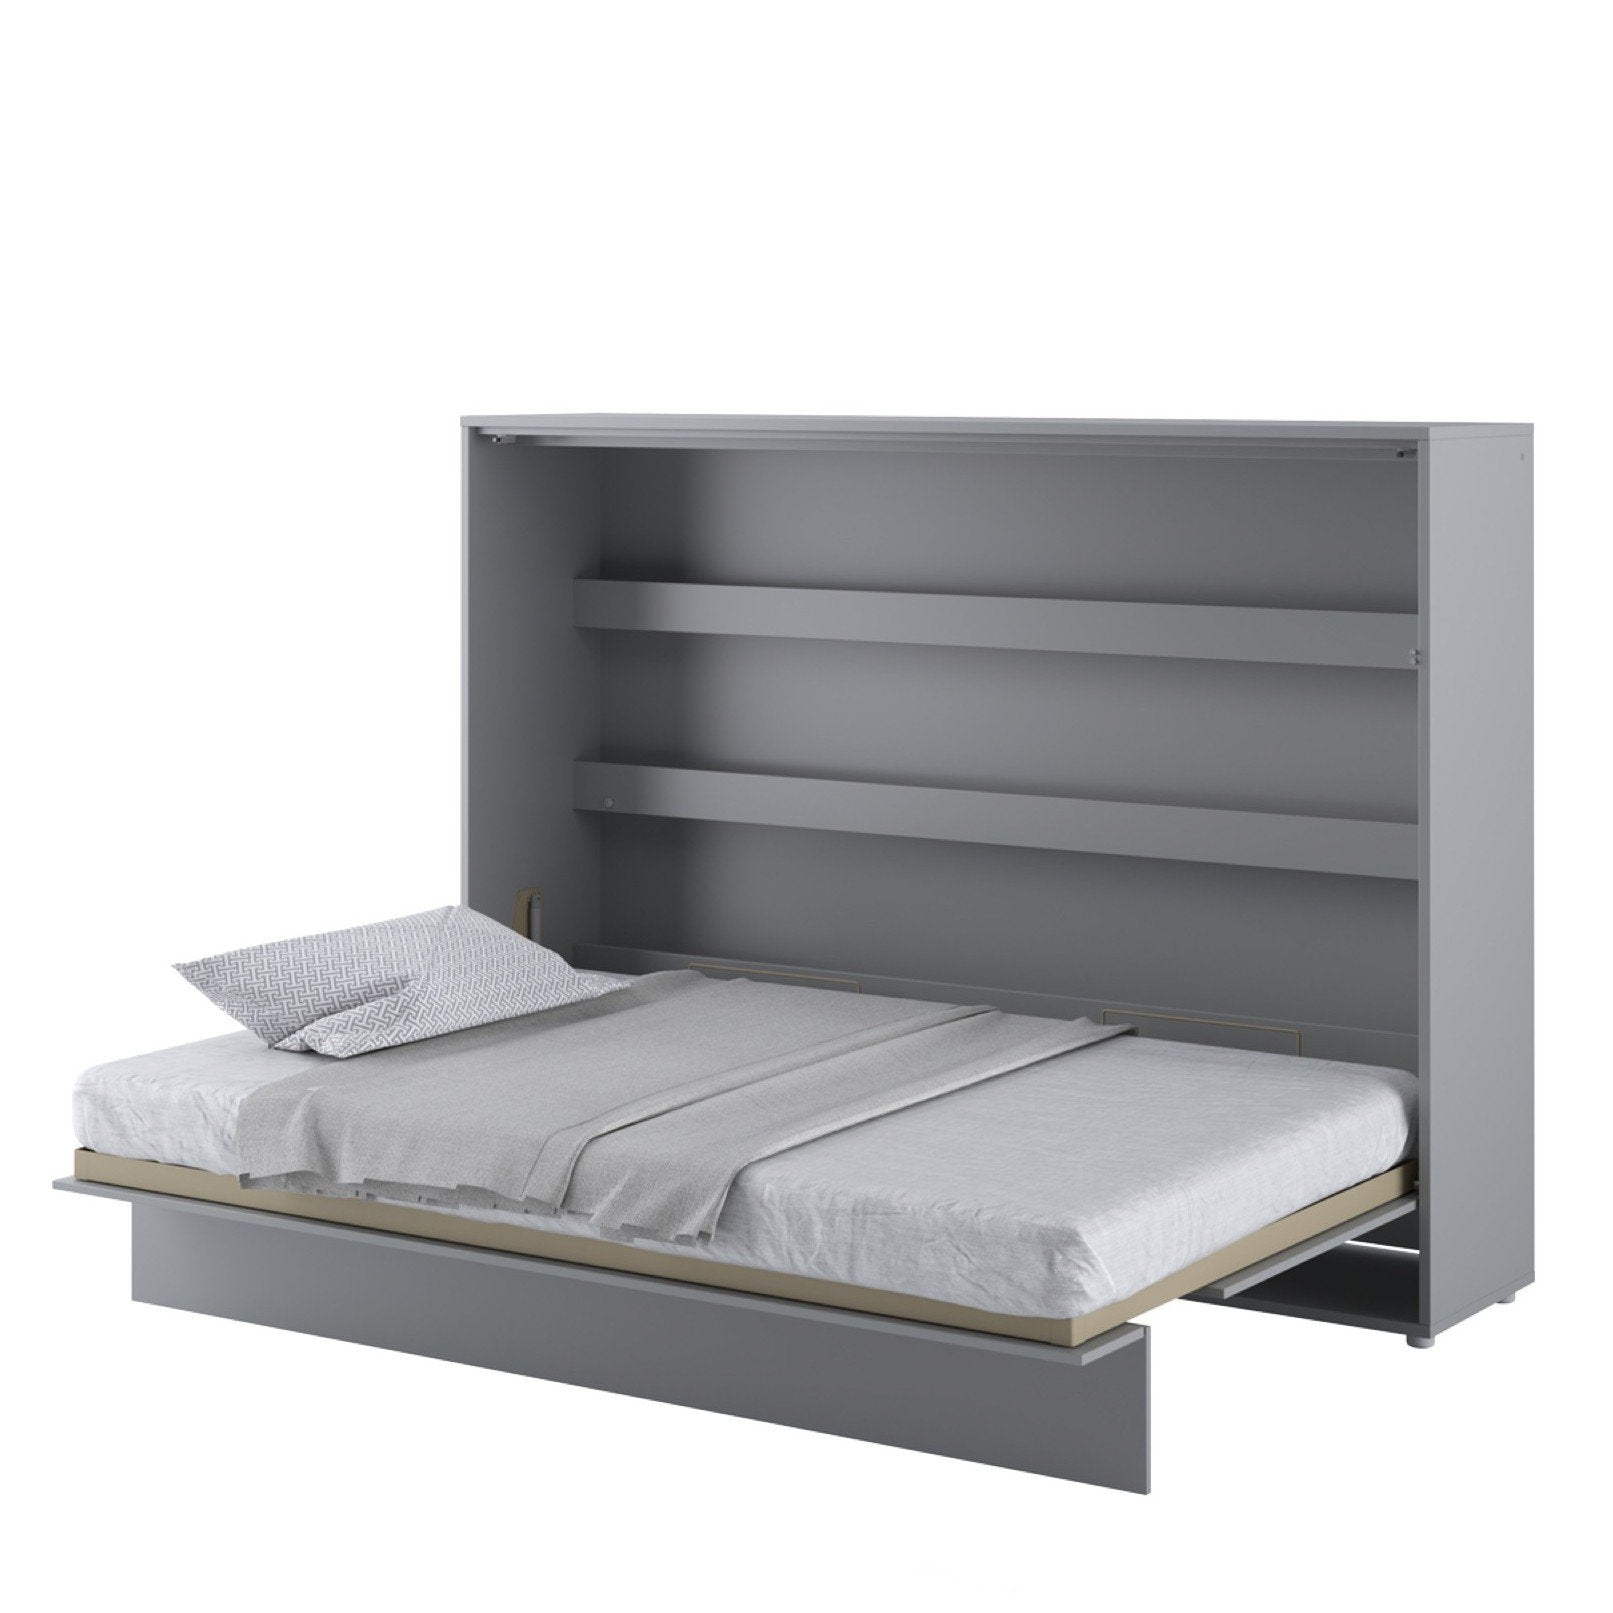 View BC04 Horizontal Wall Bed Concept 140cm Murphy Bed Grey Matt 140 x 200cm information